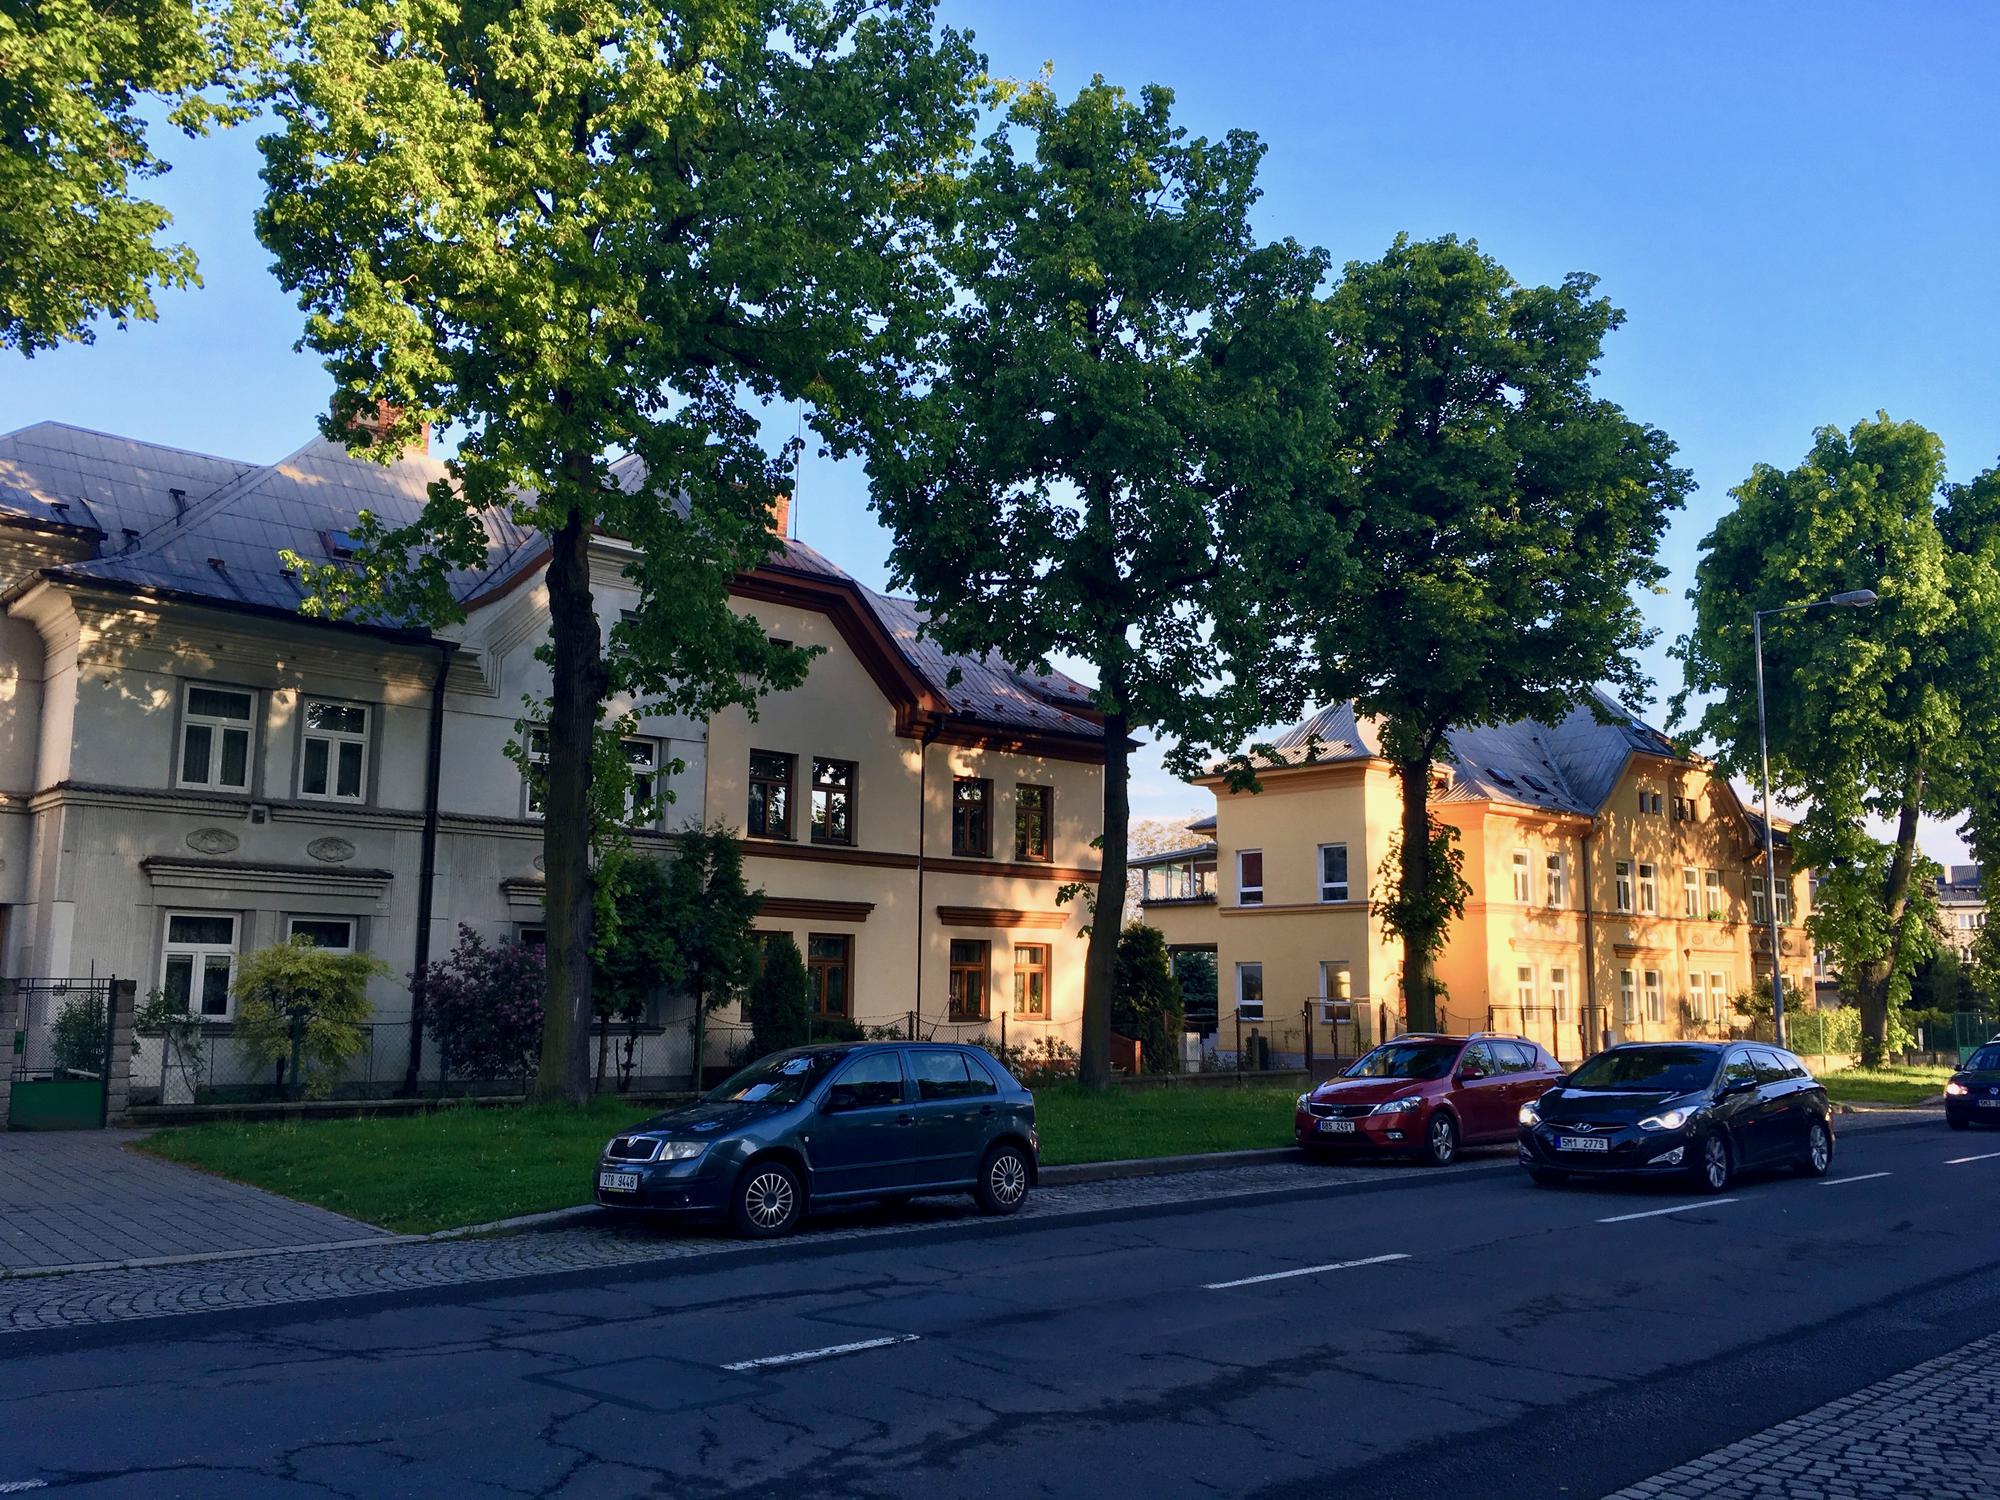 🇨🇿 Olomouc, Czech Republic, May 2017.